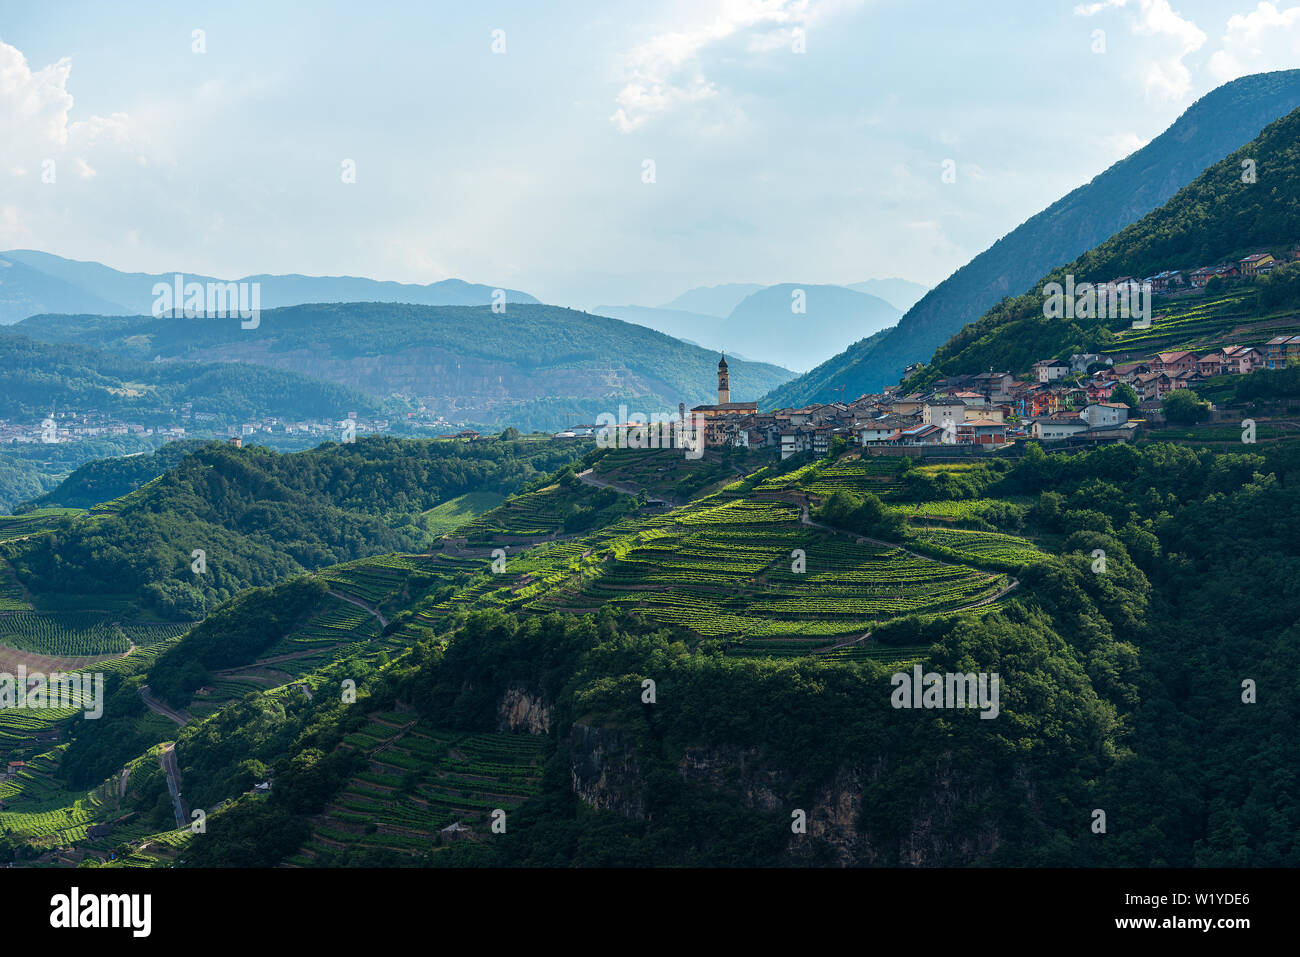 Small village of Faver, famous for wine production. Italian Alps, Cembra valley, Trento Province, Trentino Alto Adige, Italy, Europe Stock Photo